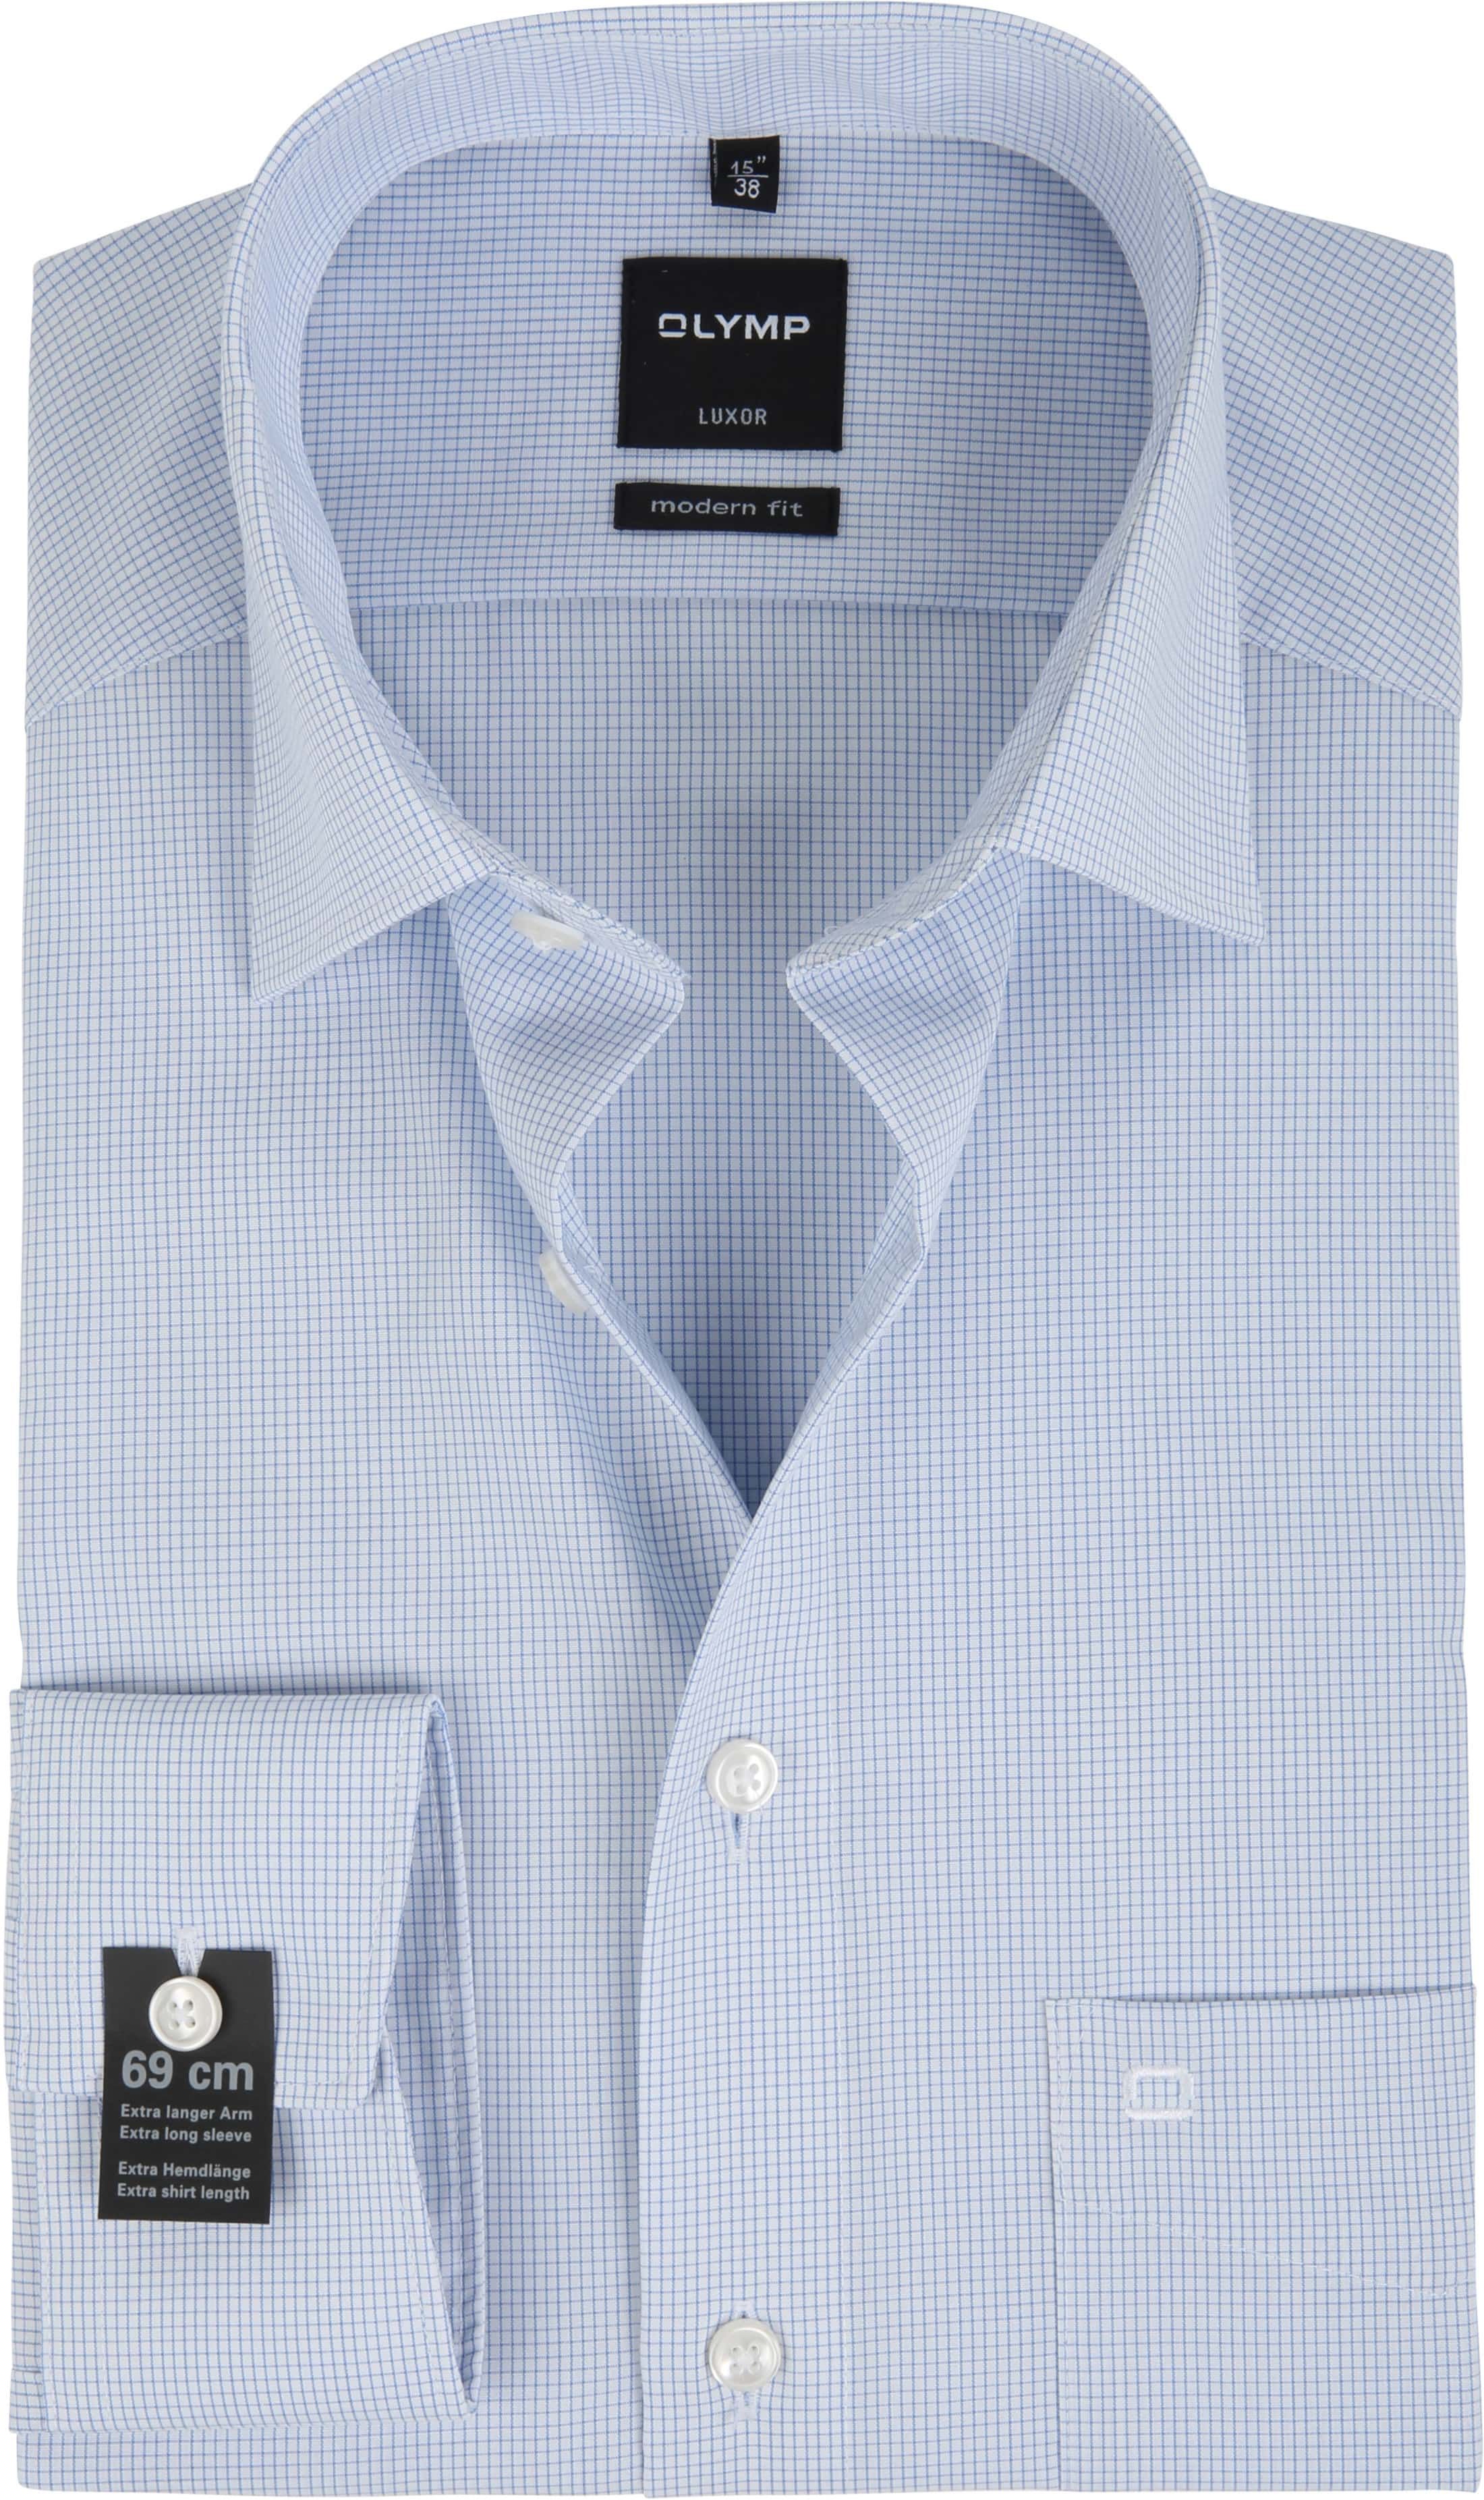 Olymp Luxor Shirt Extra Long Sleeve MF Checkered Blue size 14.5